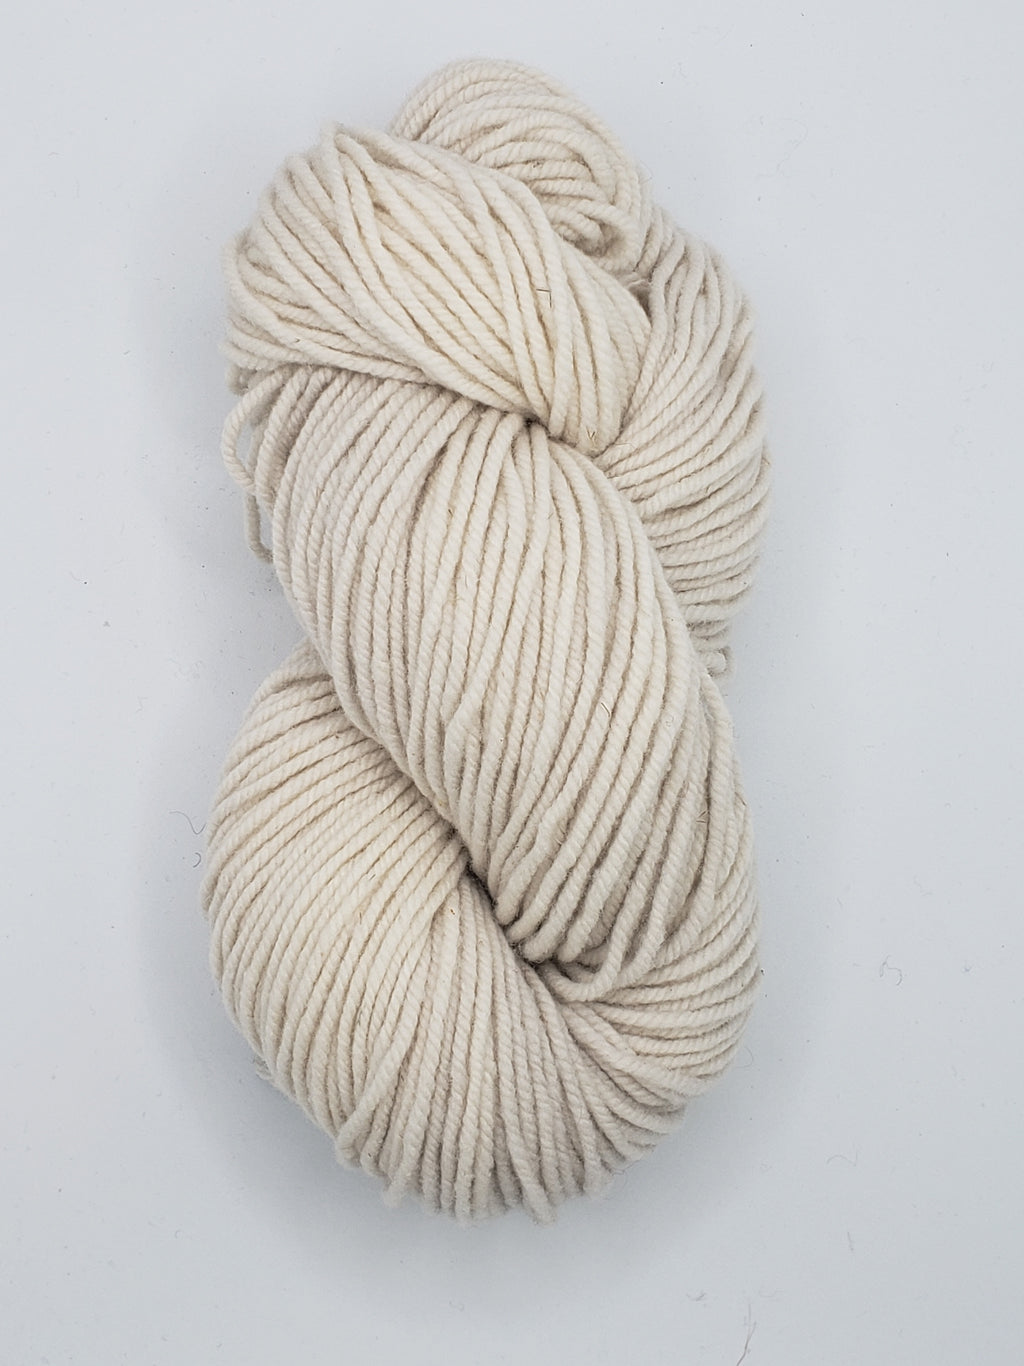 Wonder Woolen - BONE - Fleece Artist Hand Dyed Yarn 4 ounces/115g